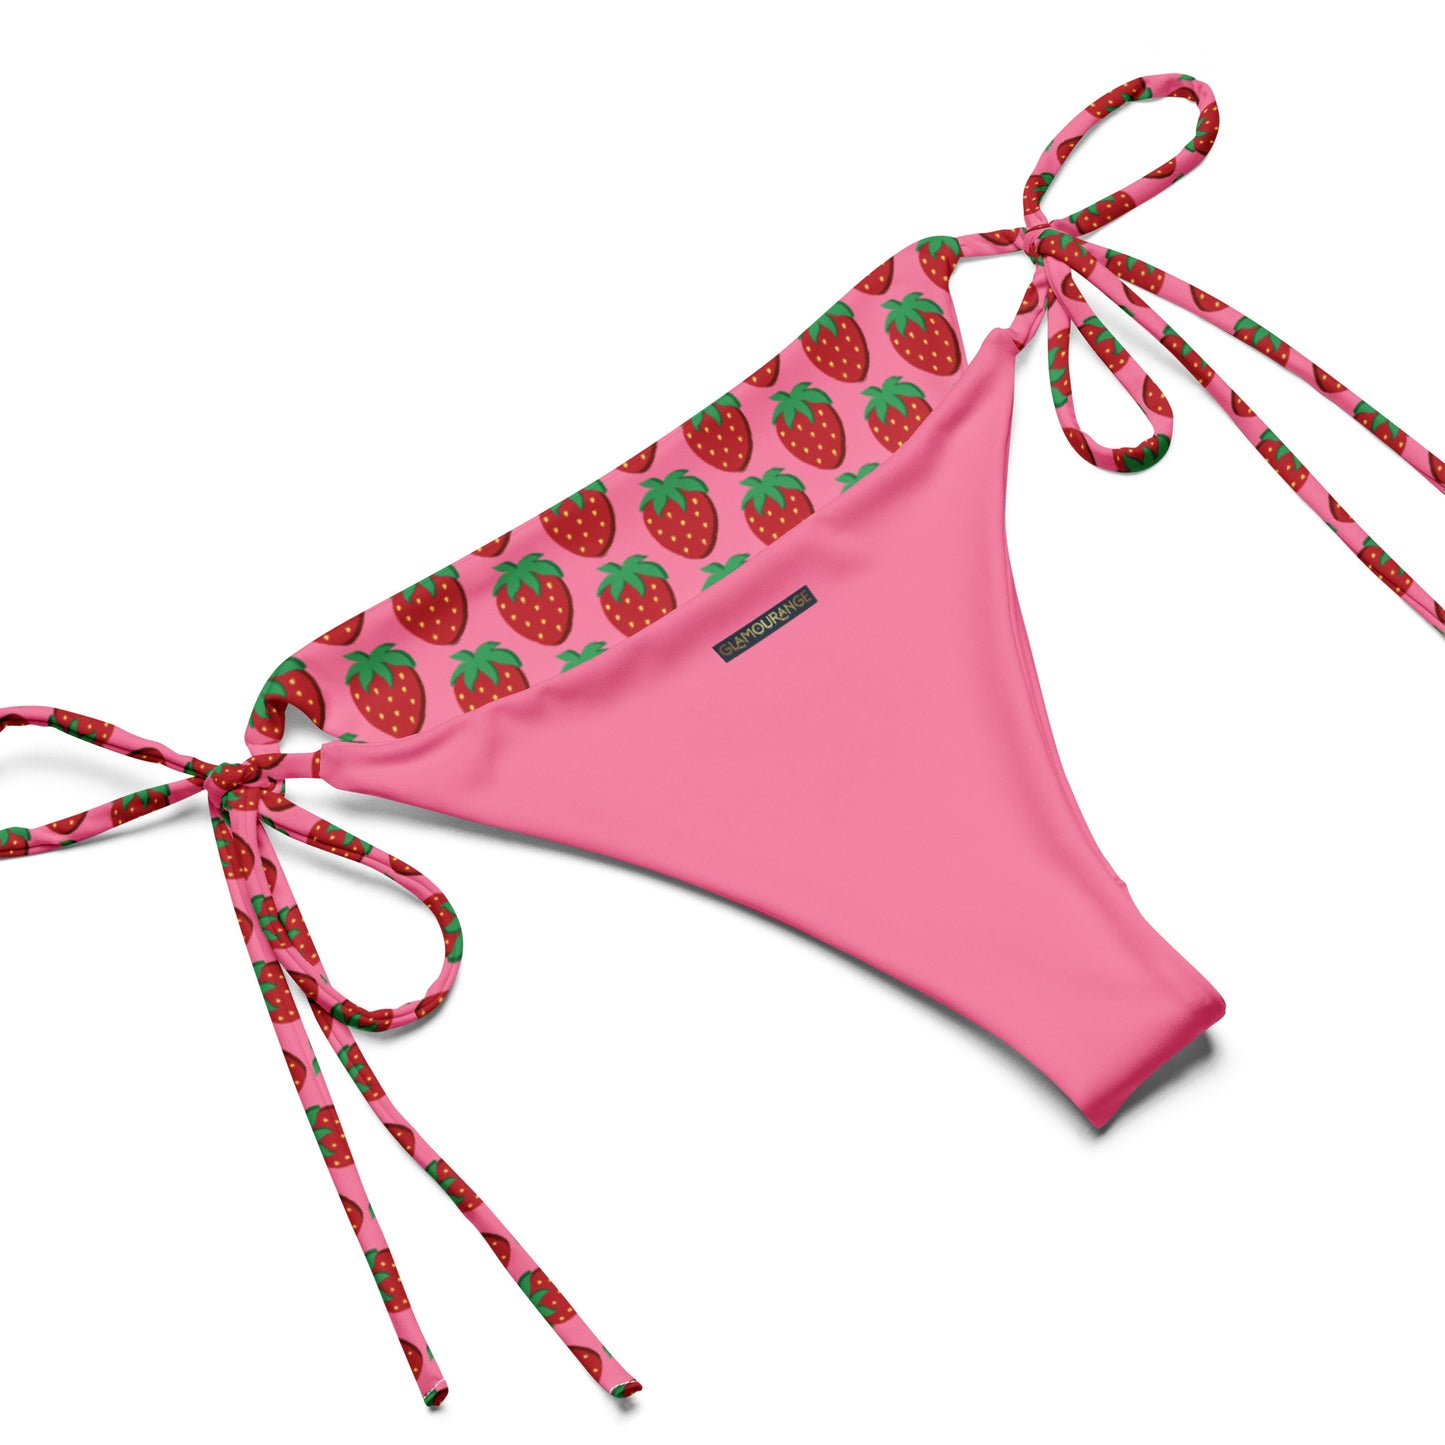 String Bikini (Glamourange Women Swimwear By Patterns - 001 Model)